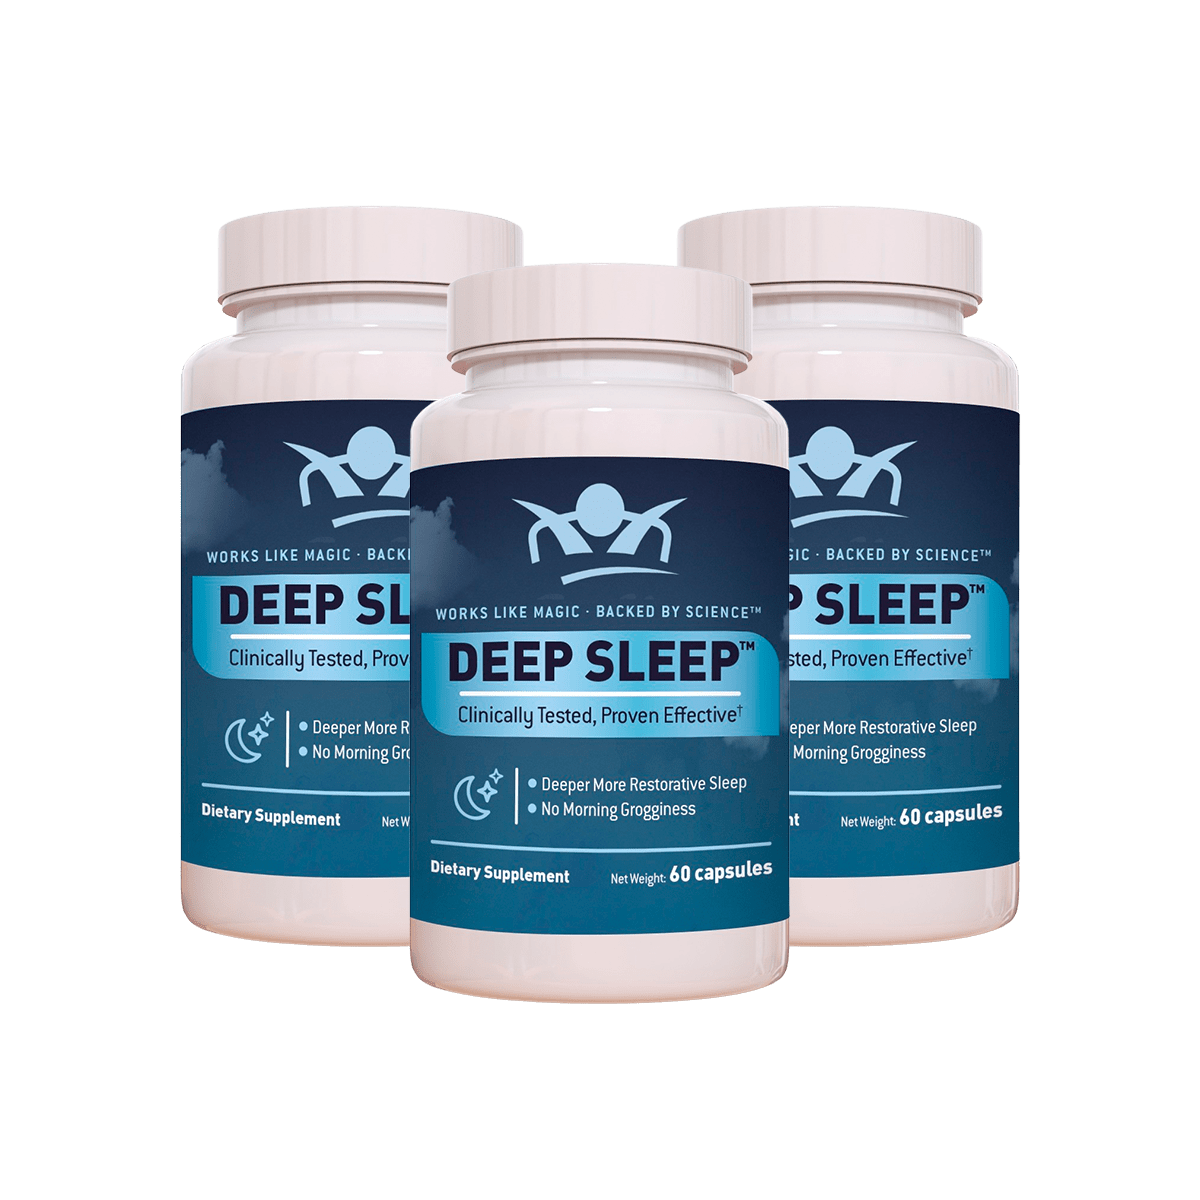 Deep Sleep Buy 2 Get 1 Free